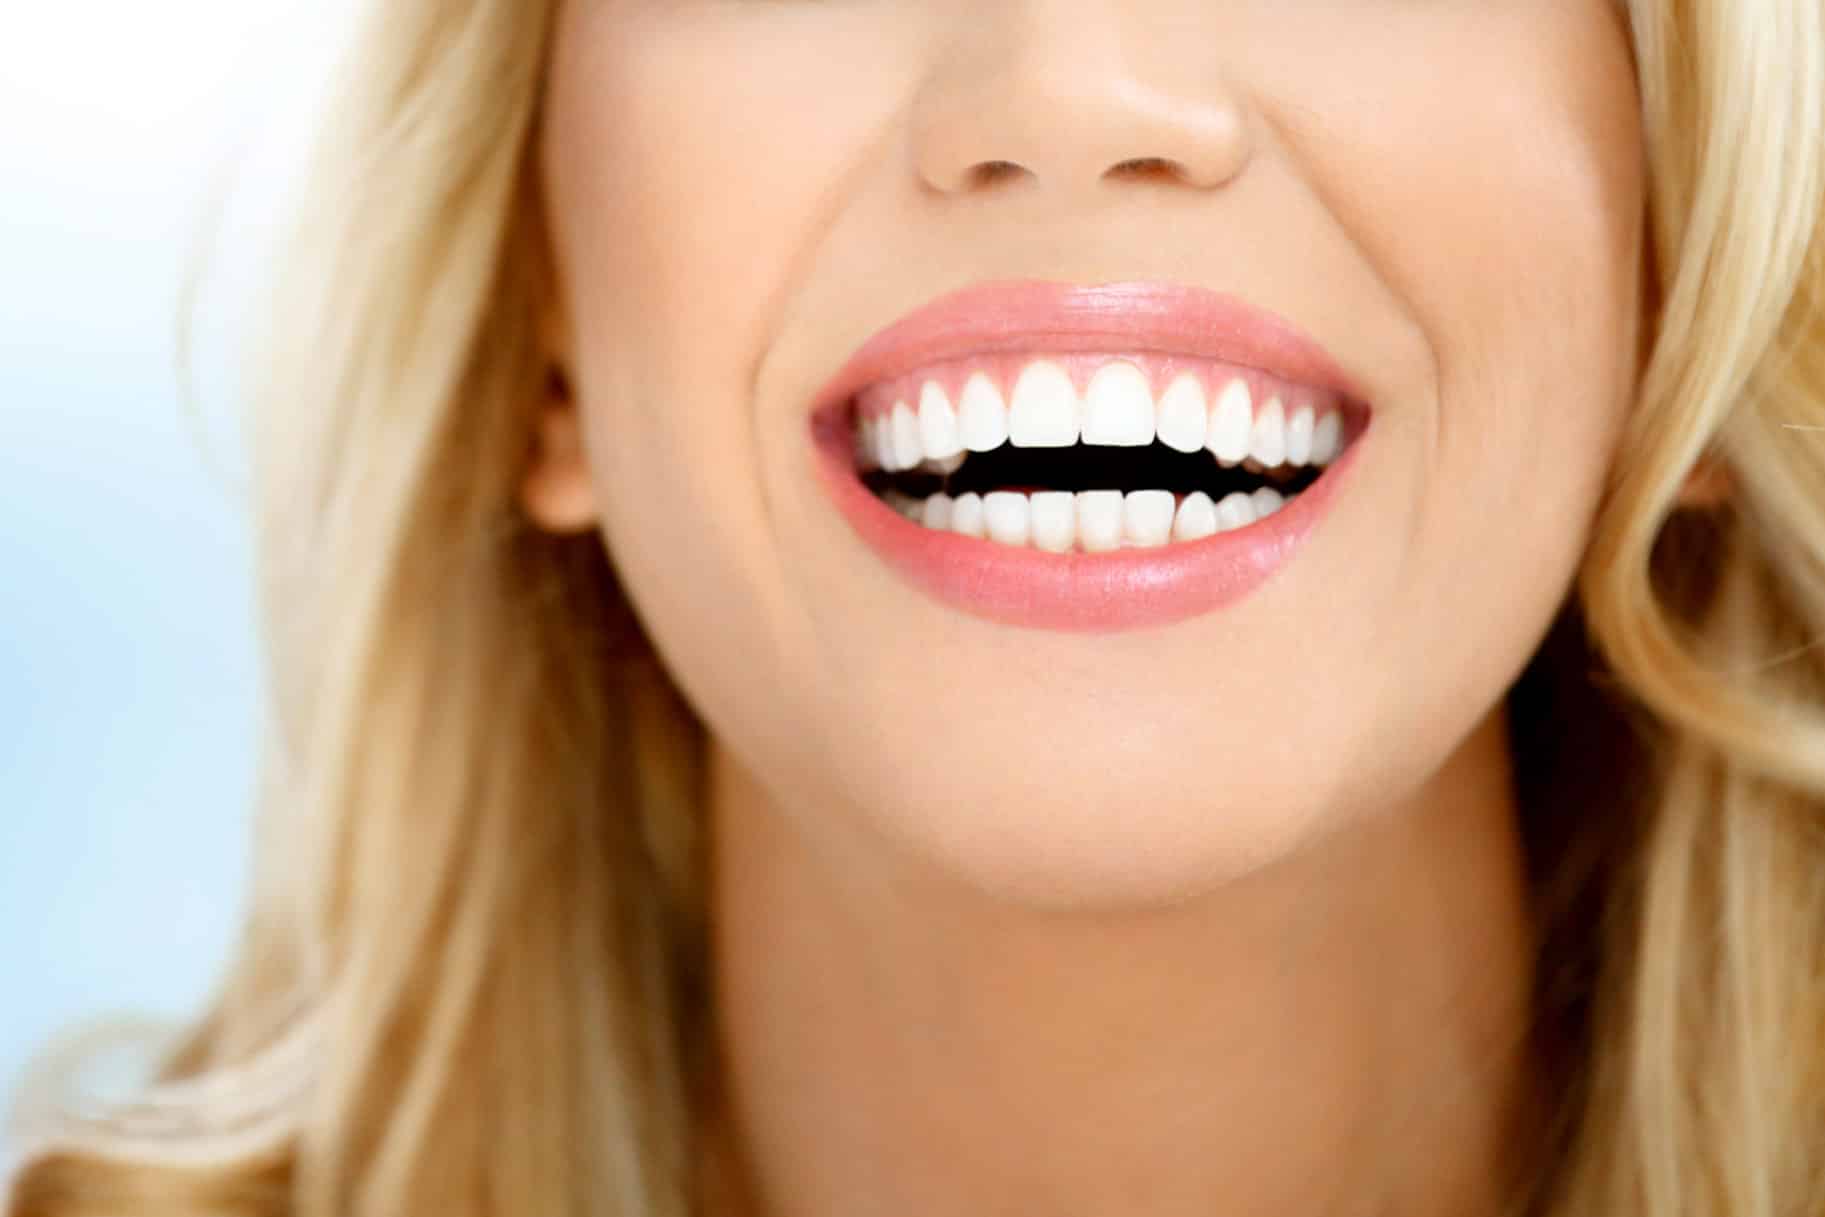 How Do You Whiten Teeth?